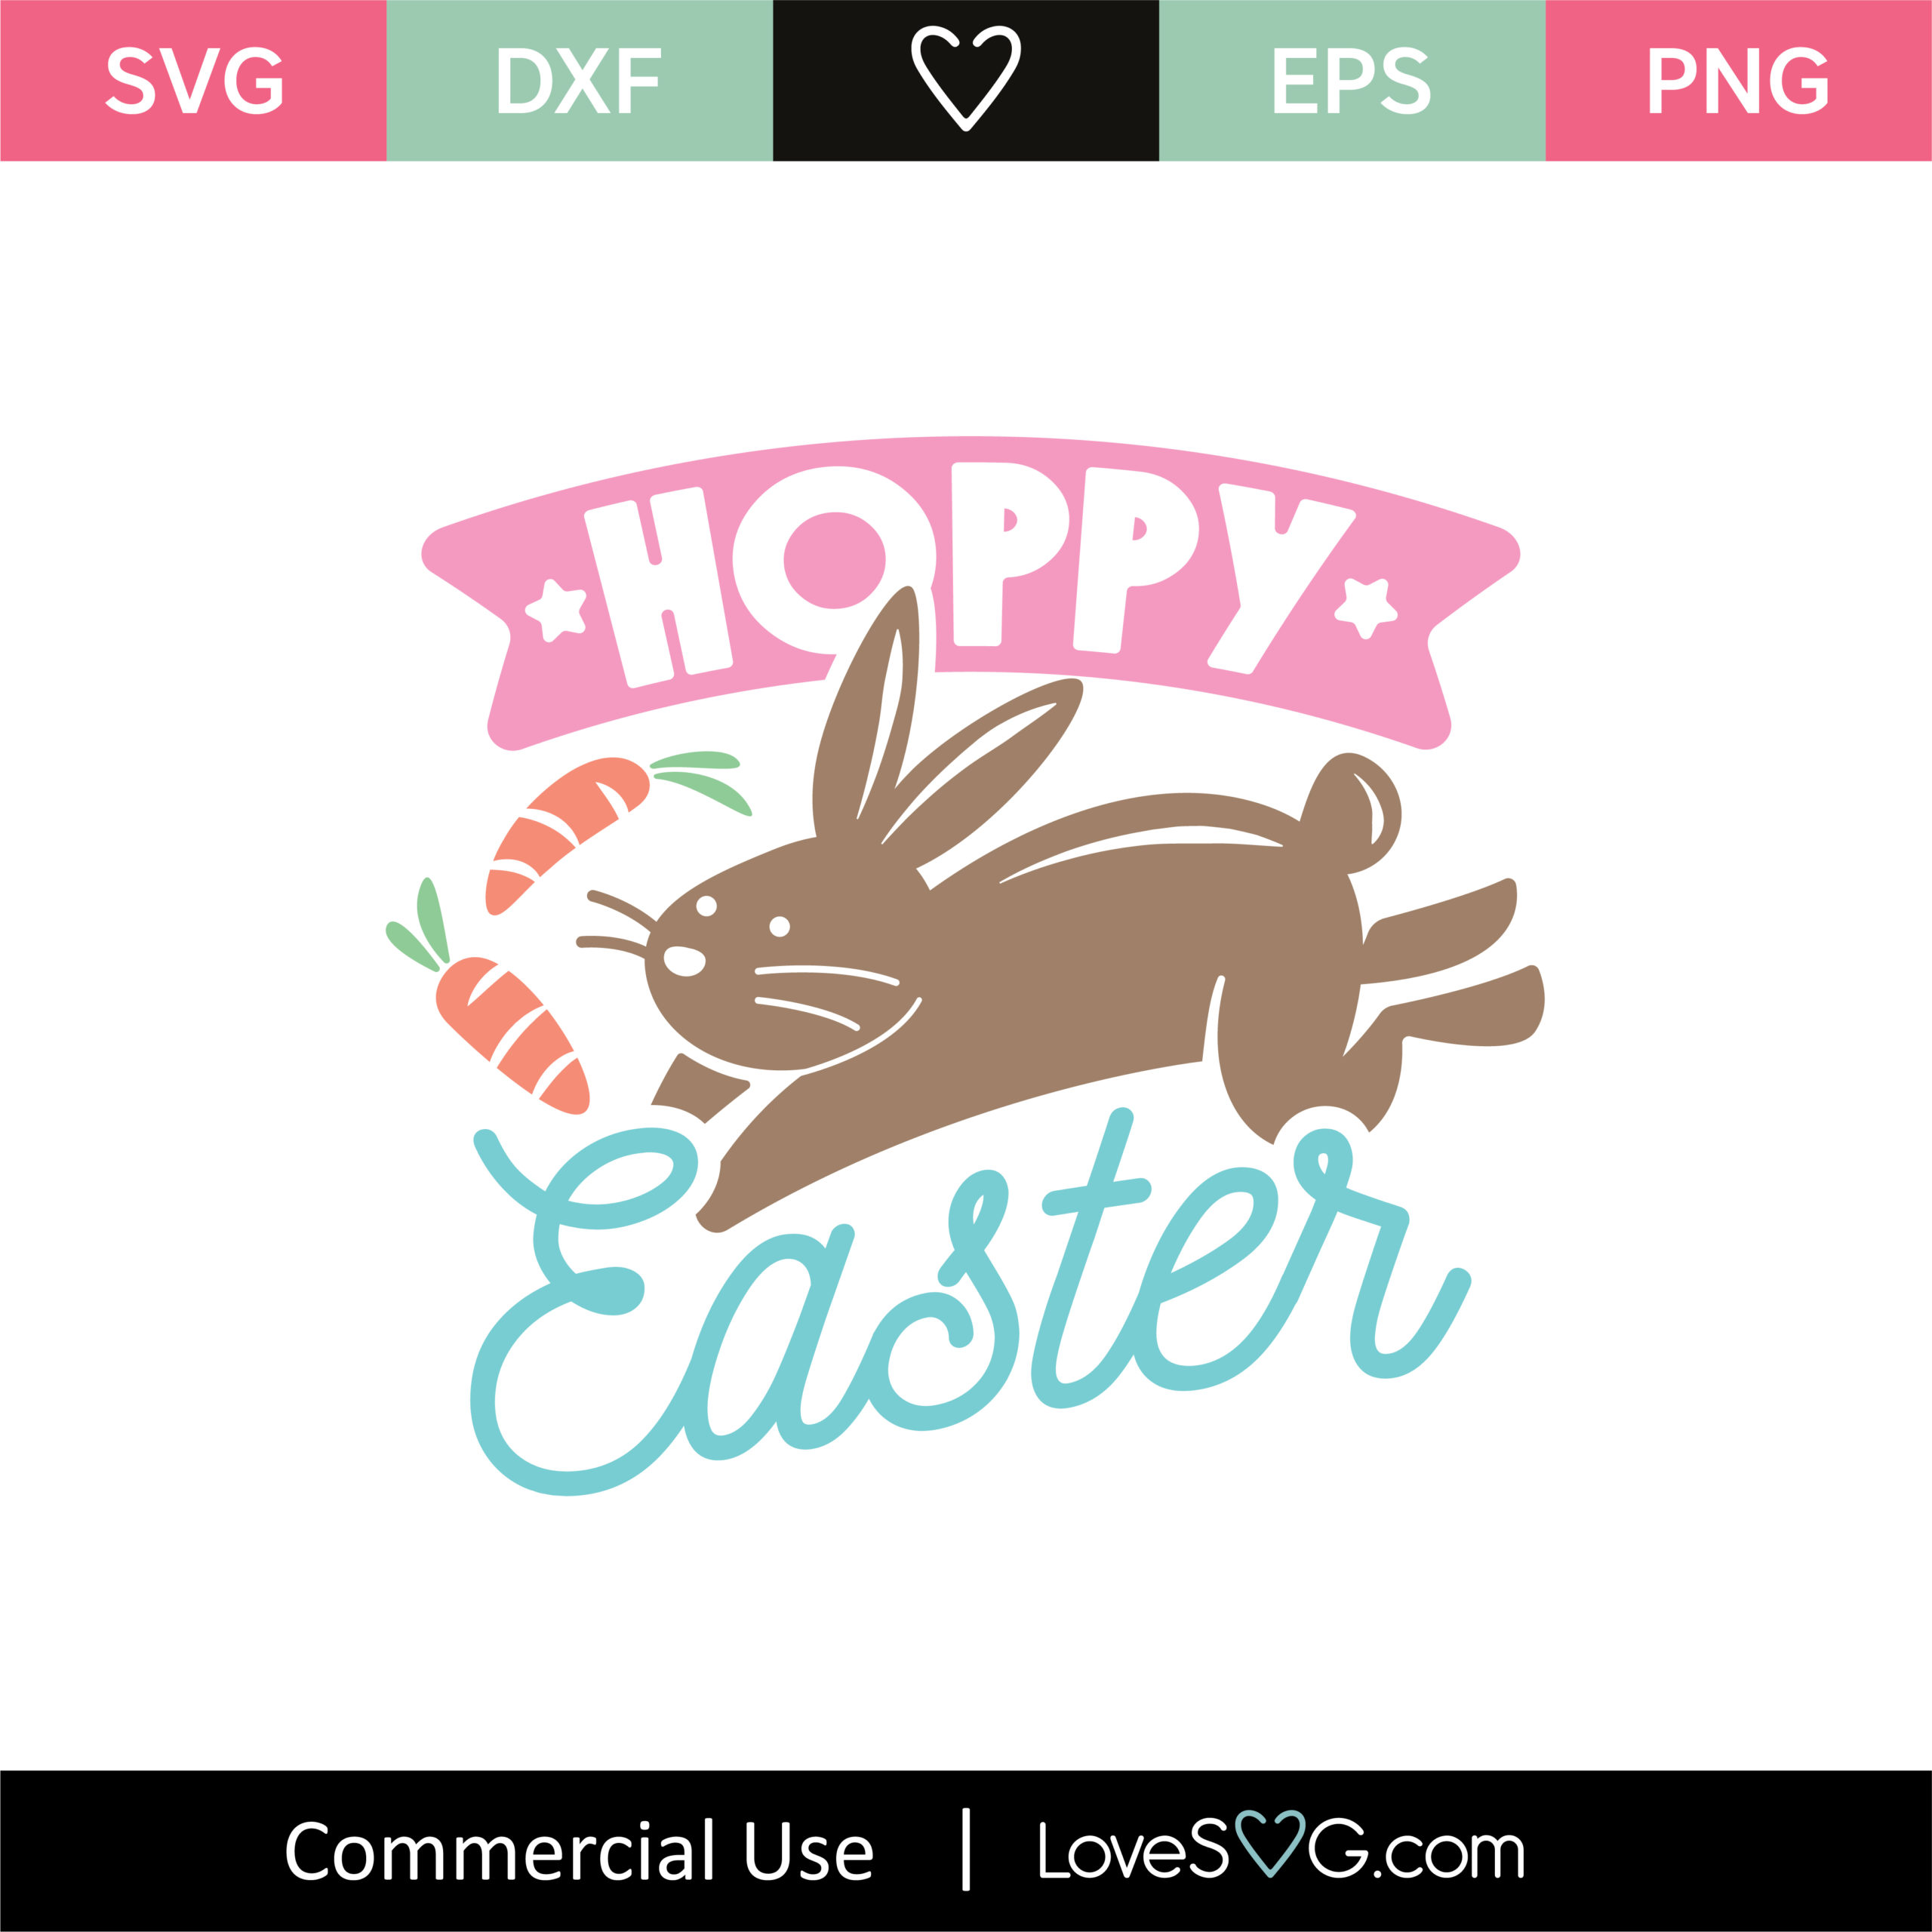 Hoppy Easter SVG Cut File - Lovesvg.com